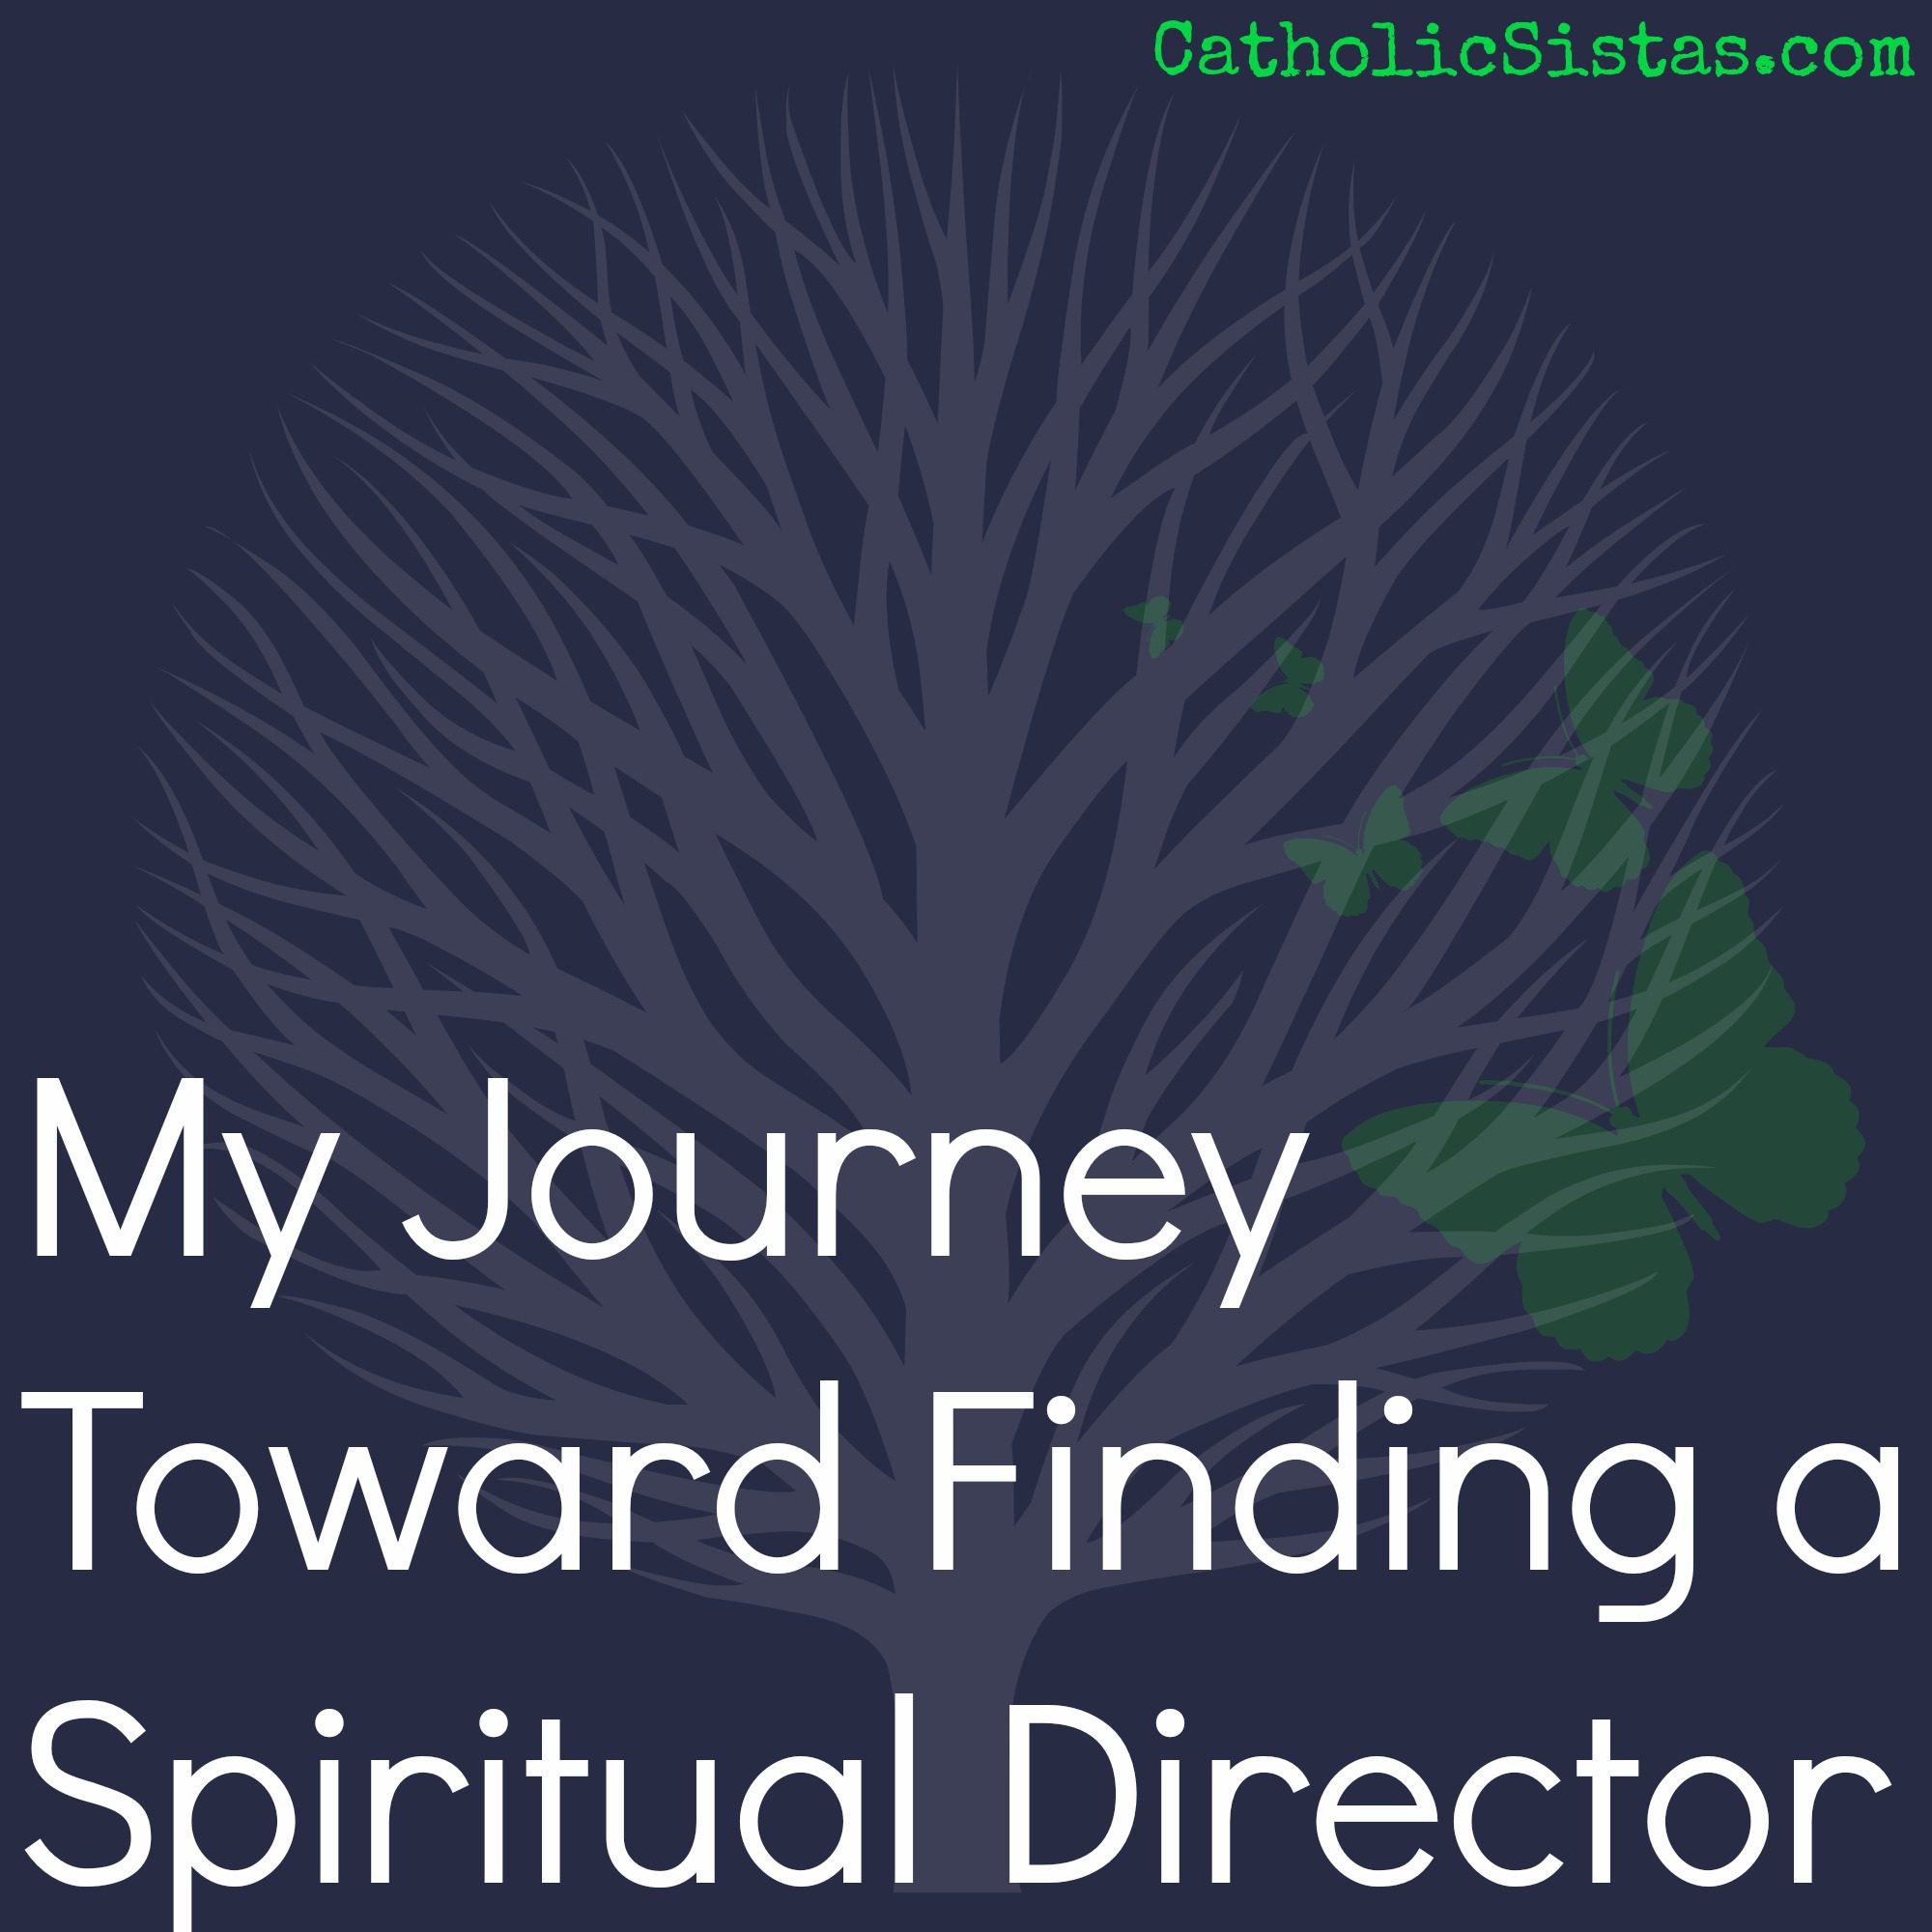 My Journey toward Finding a Spiritual Director